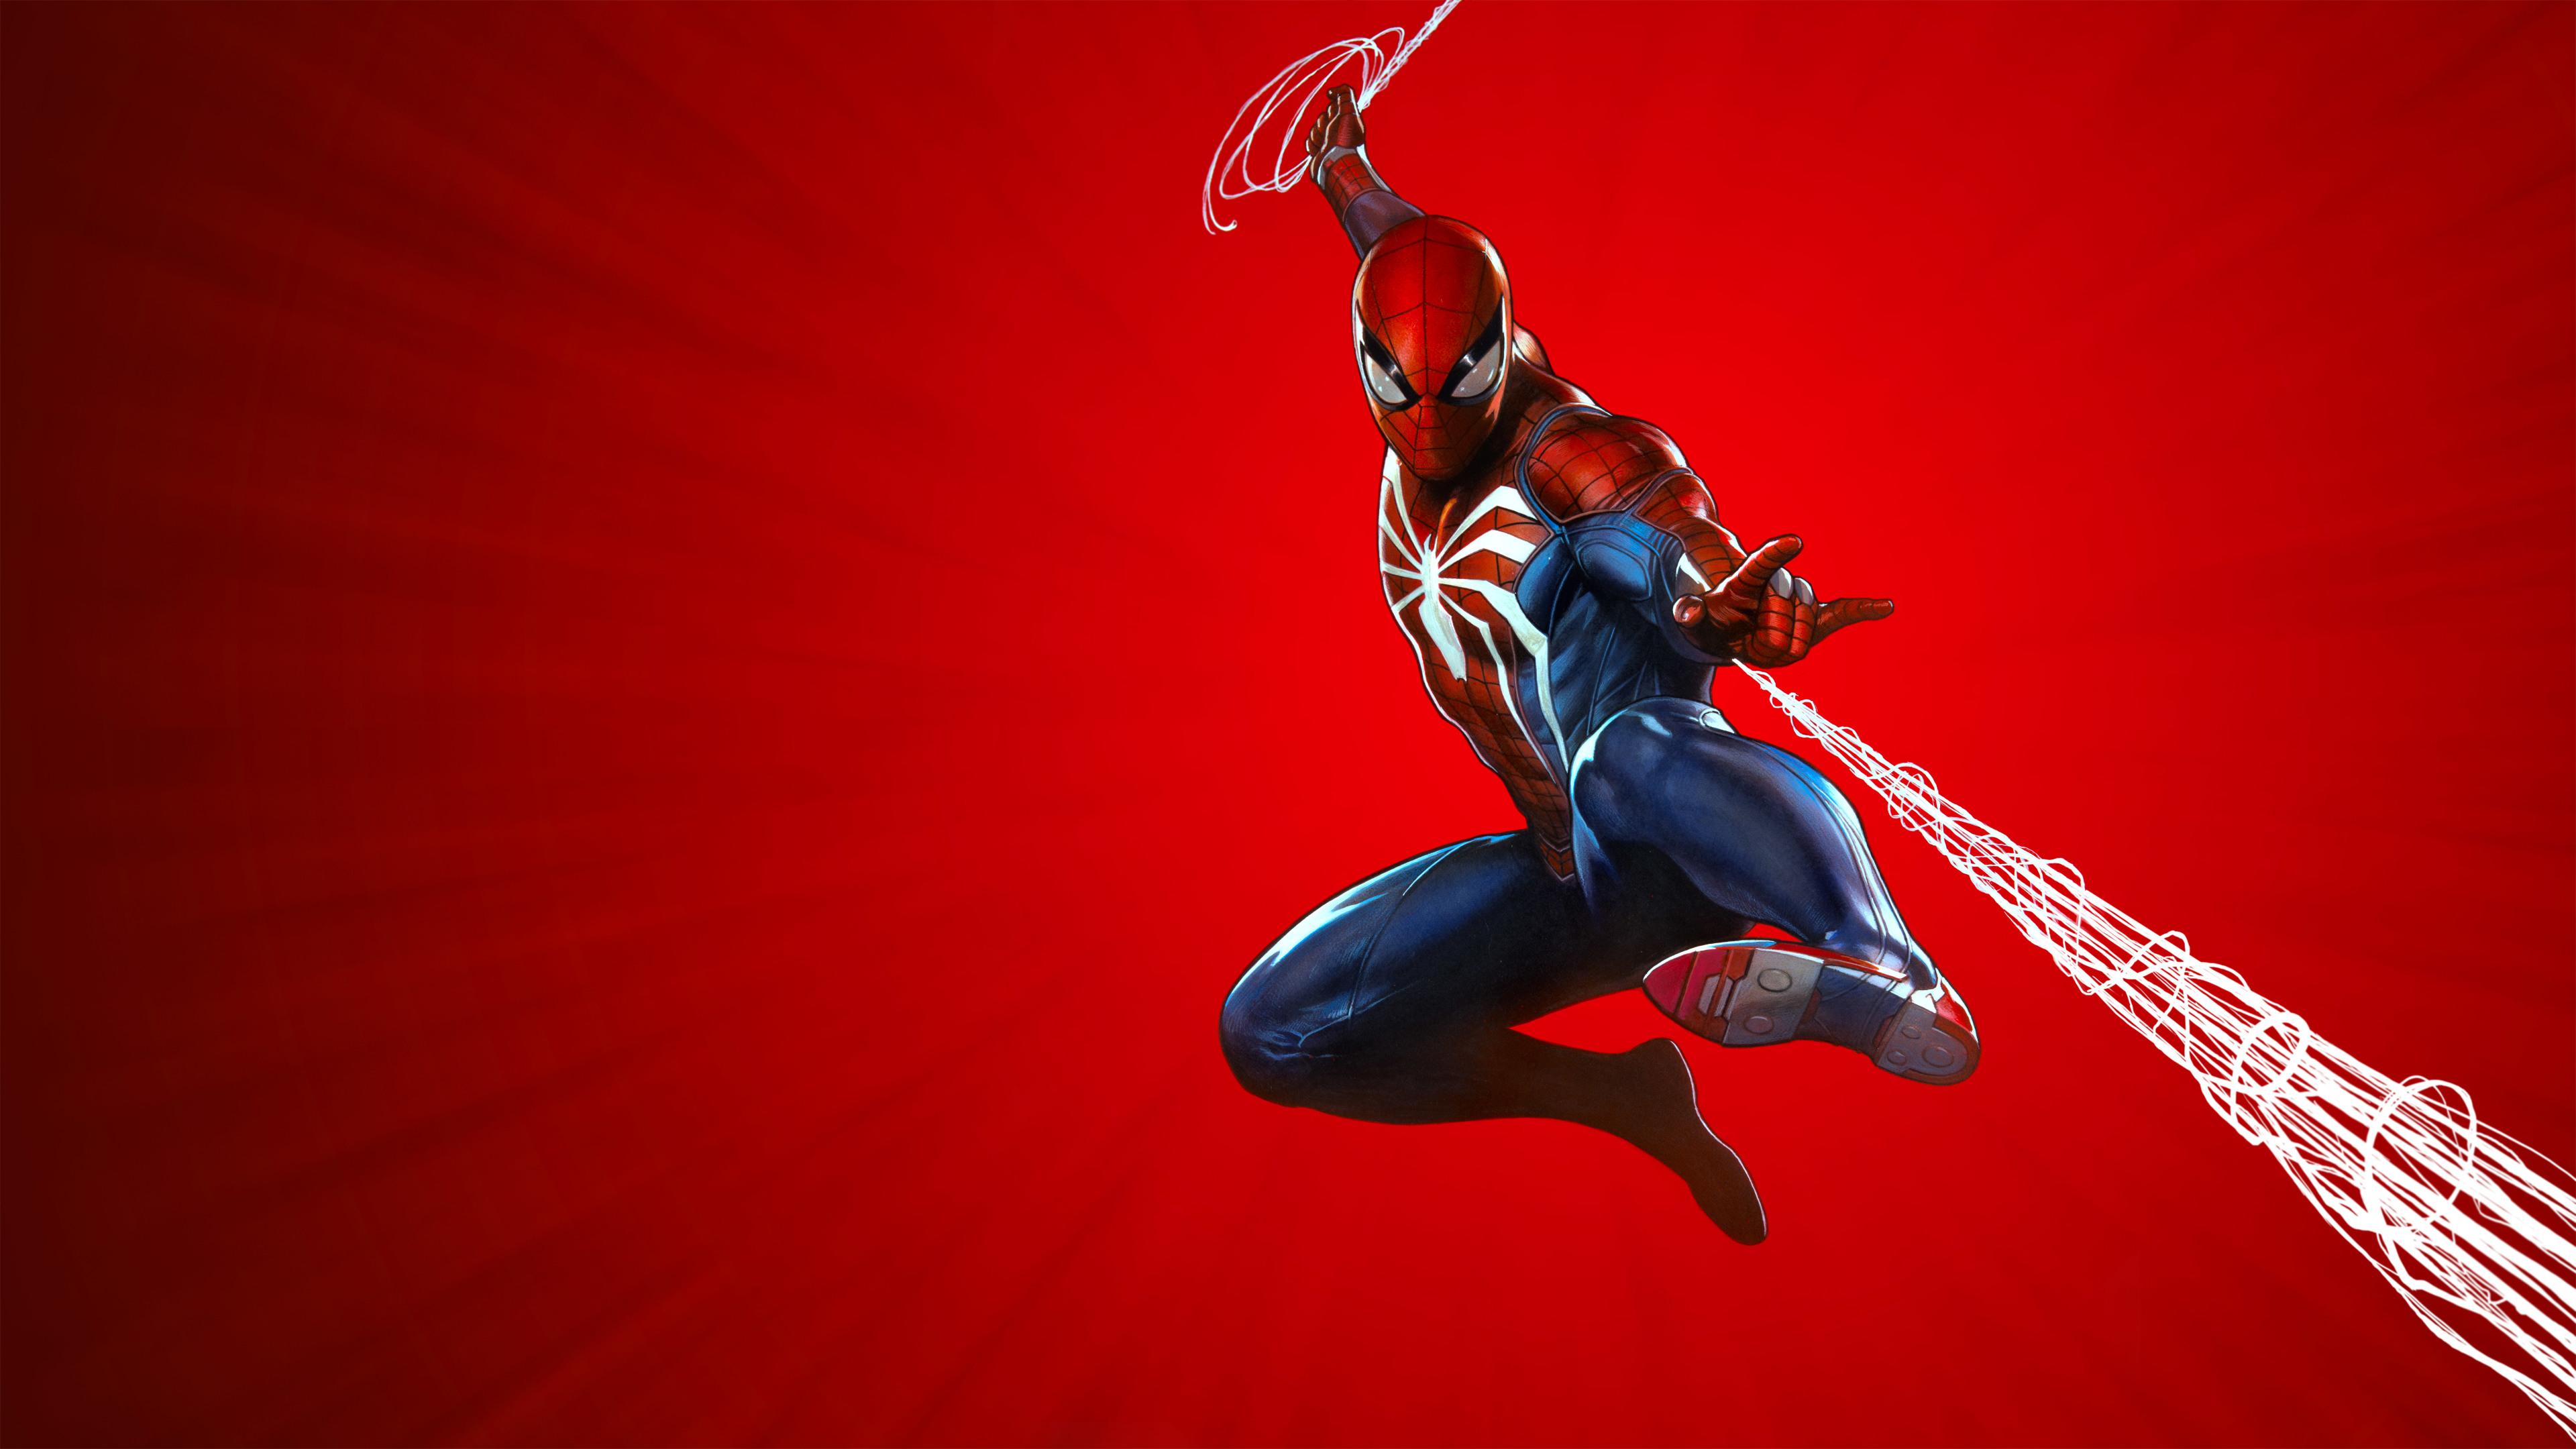 Spider Man PS4 4K Wallpaper, HD Games 4K Wallpaper